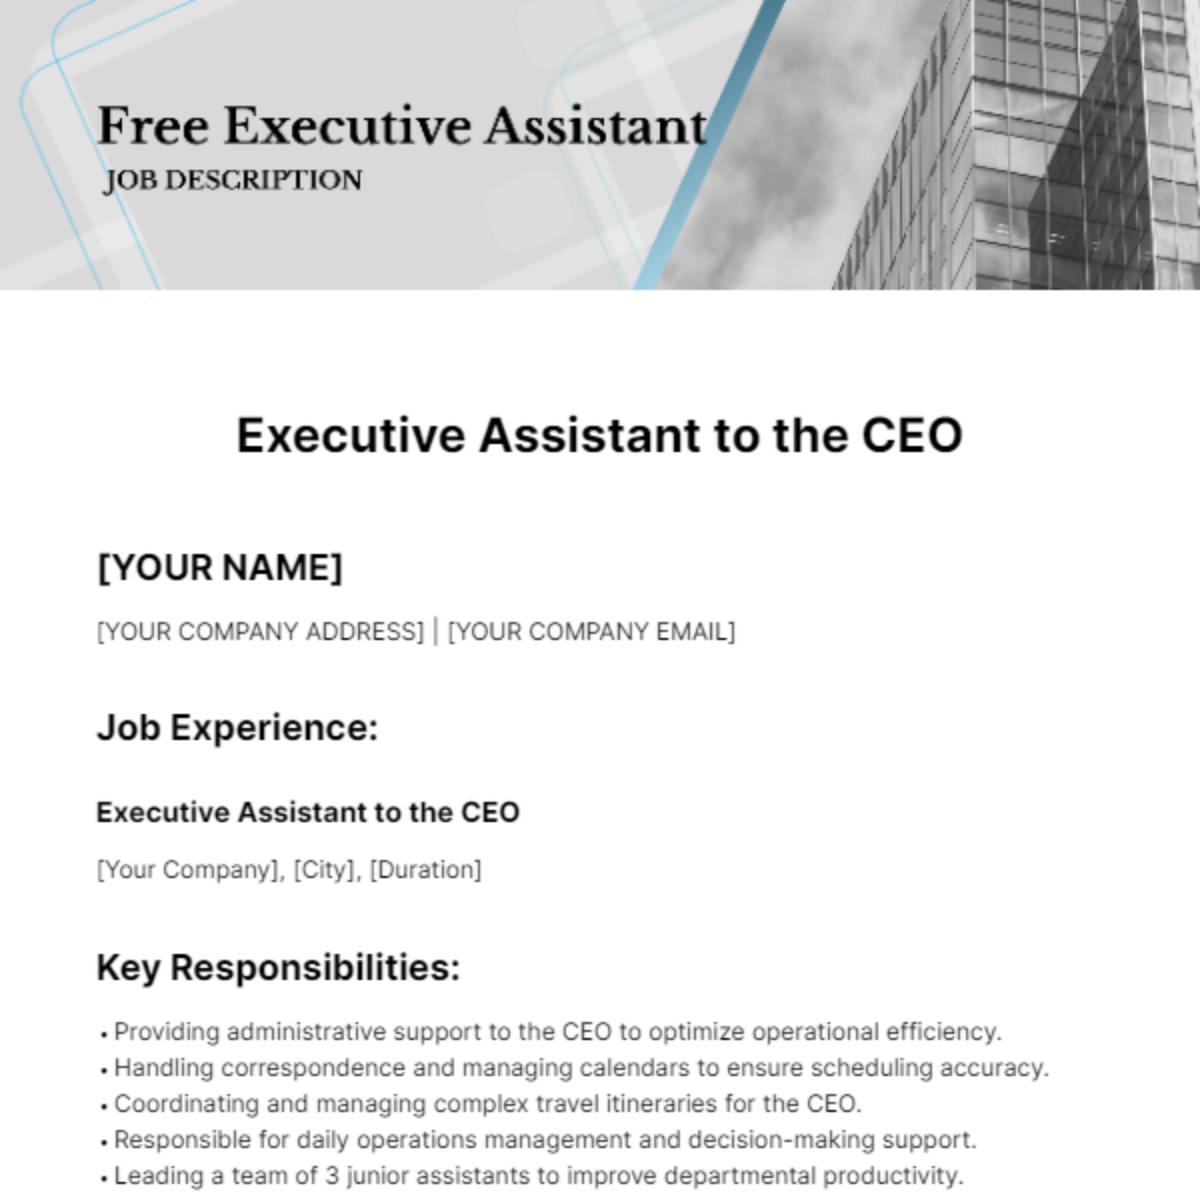 Free Executive Assistant Job Description for Resume Template